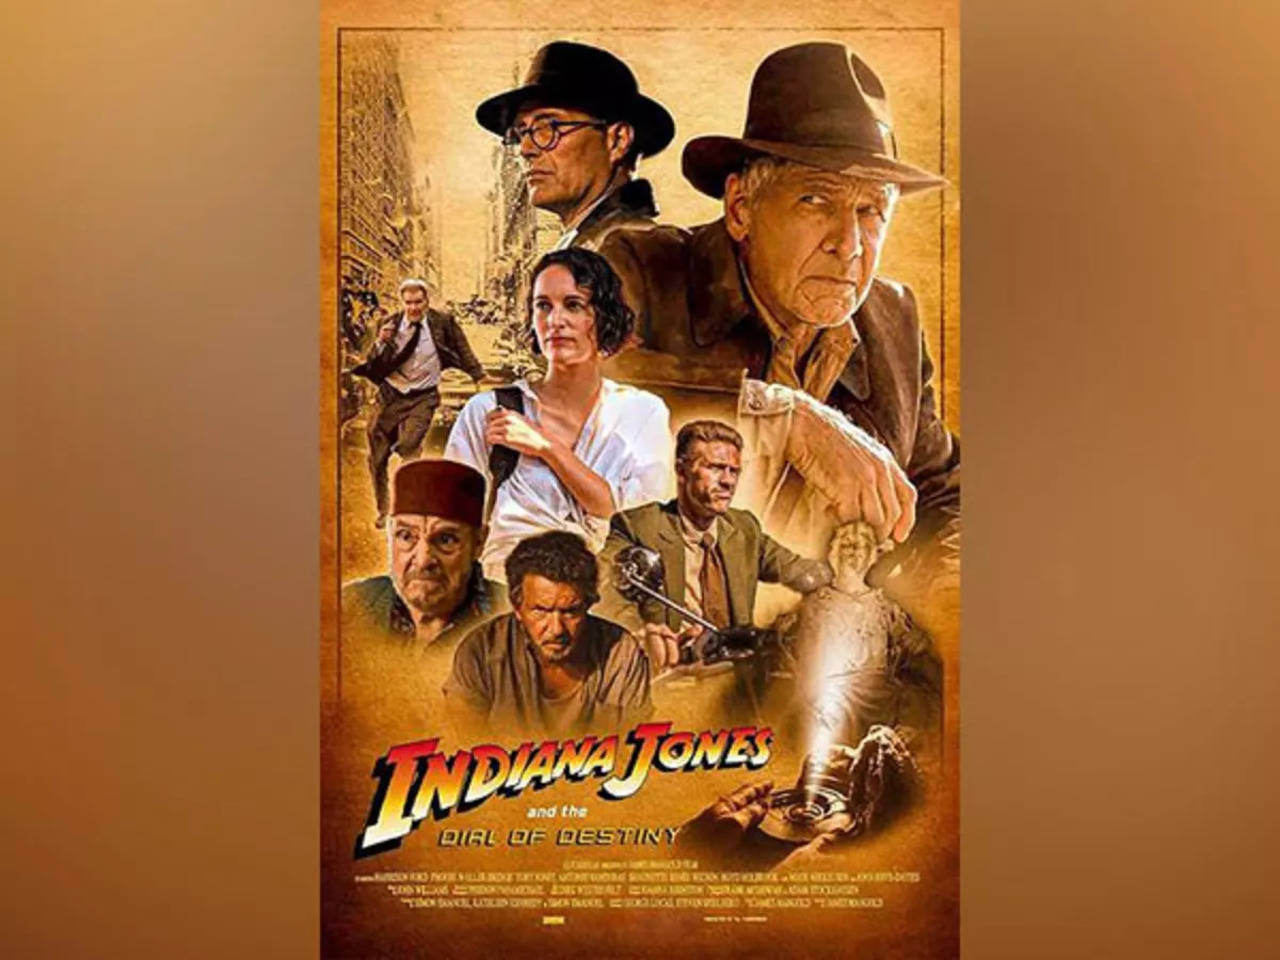 Indiana Jones 5' to Receive Huge, International Honor Next Month